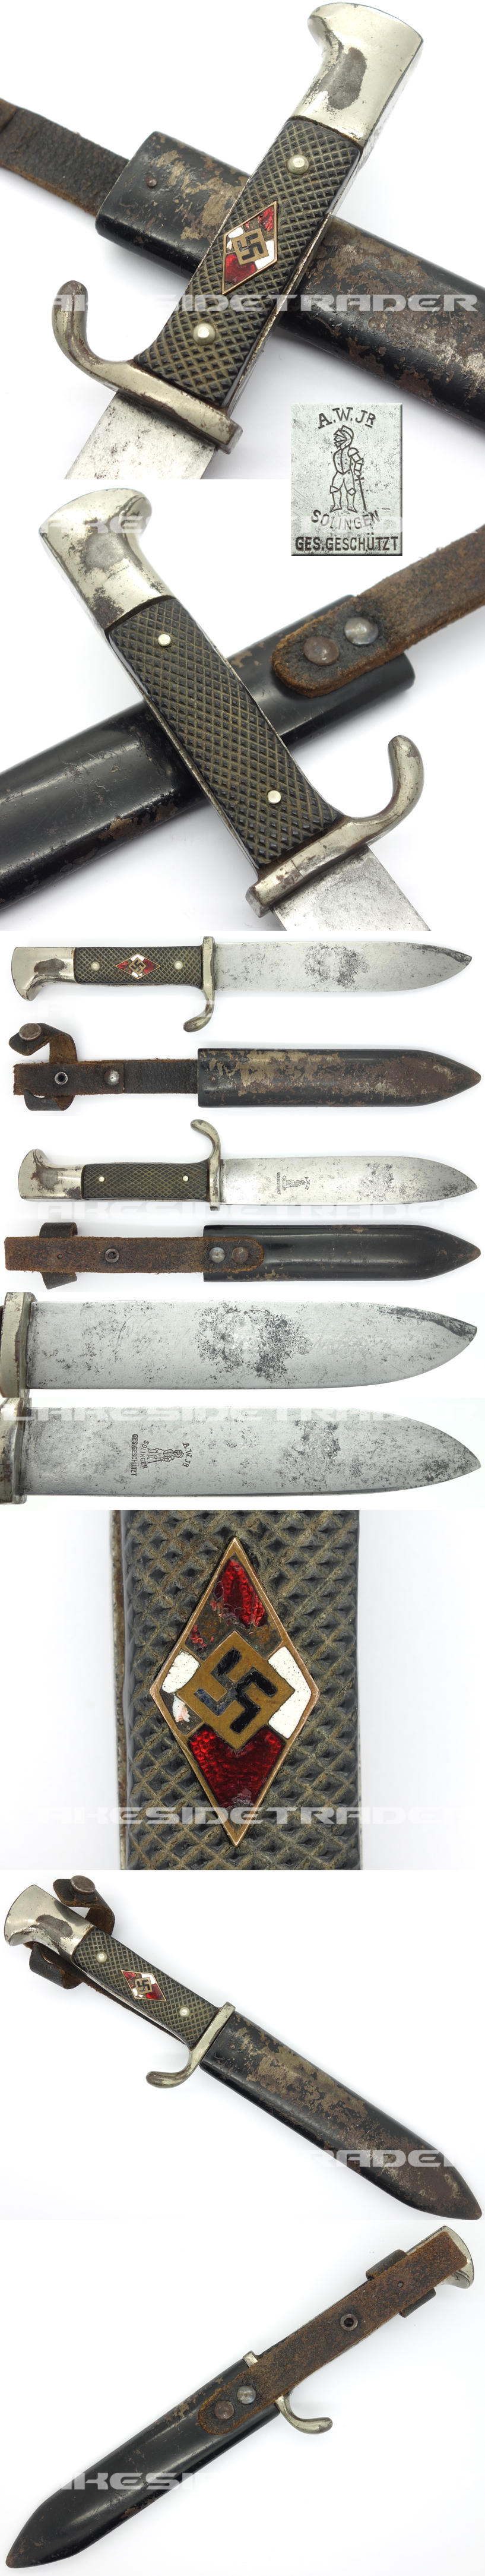 Early Hitler Youth Knife by Anton Wingen